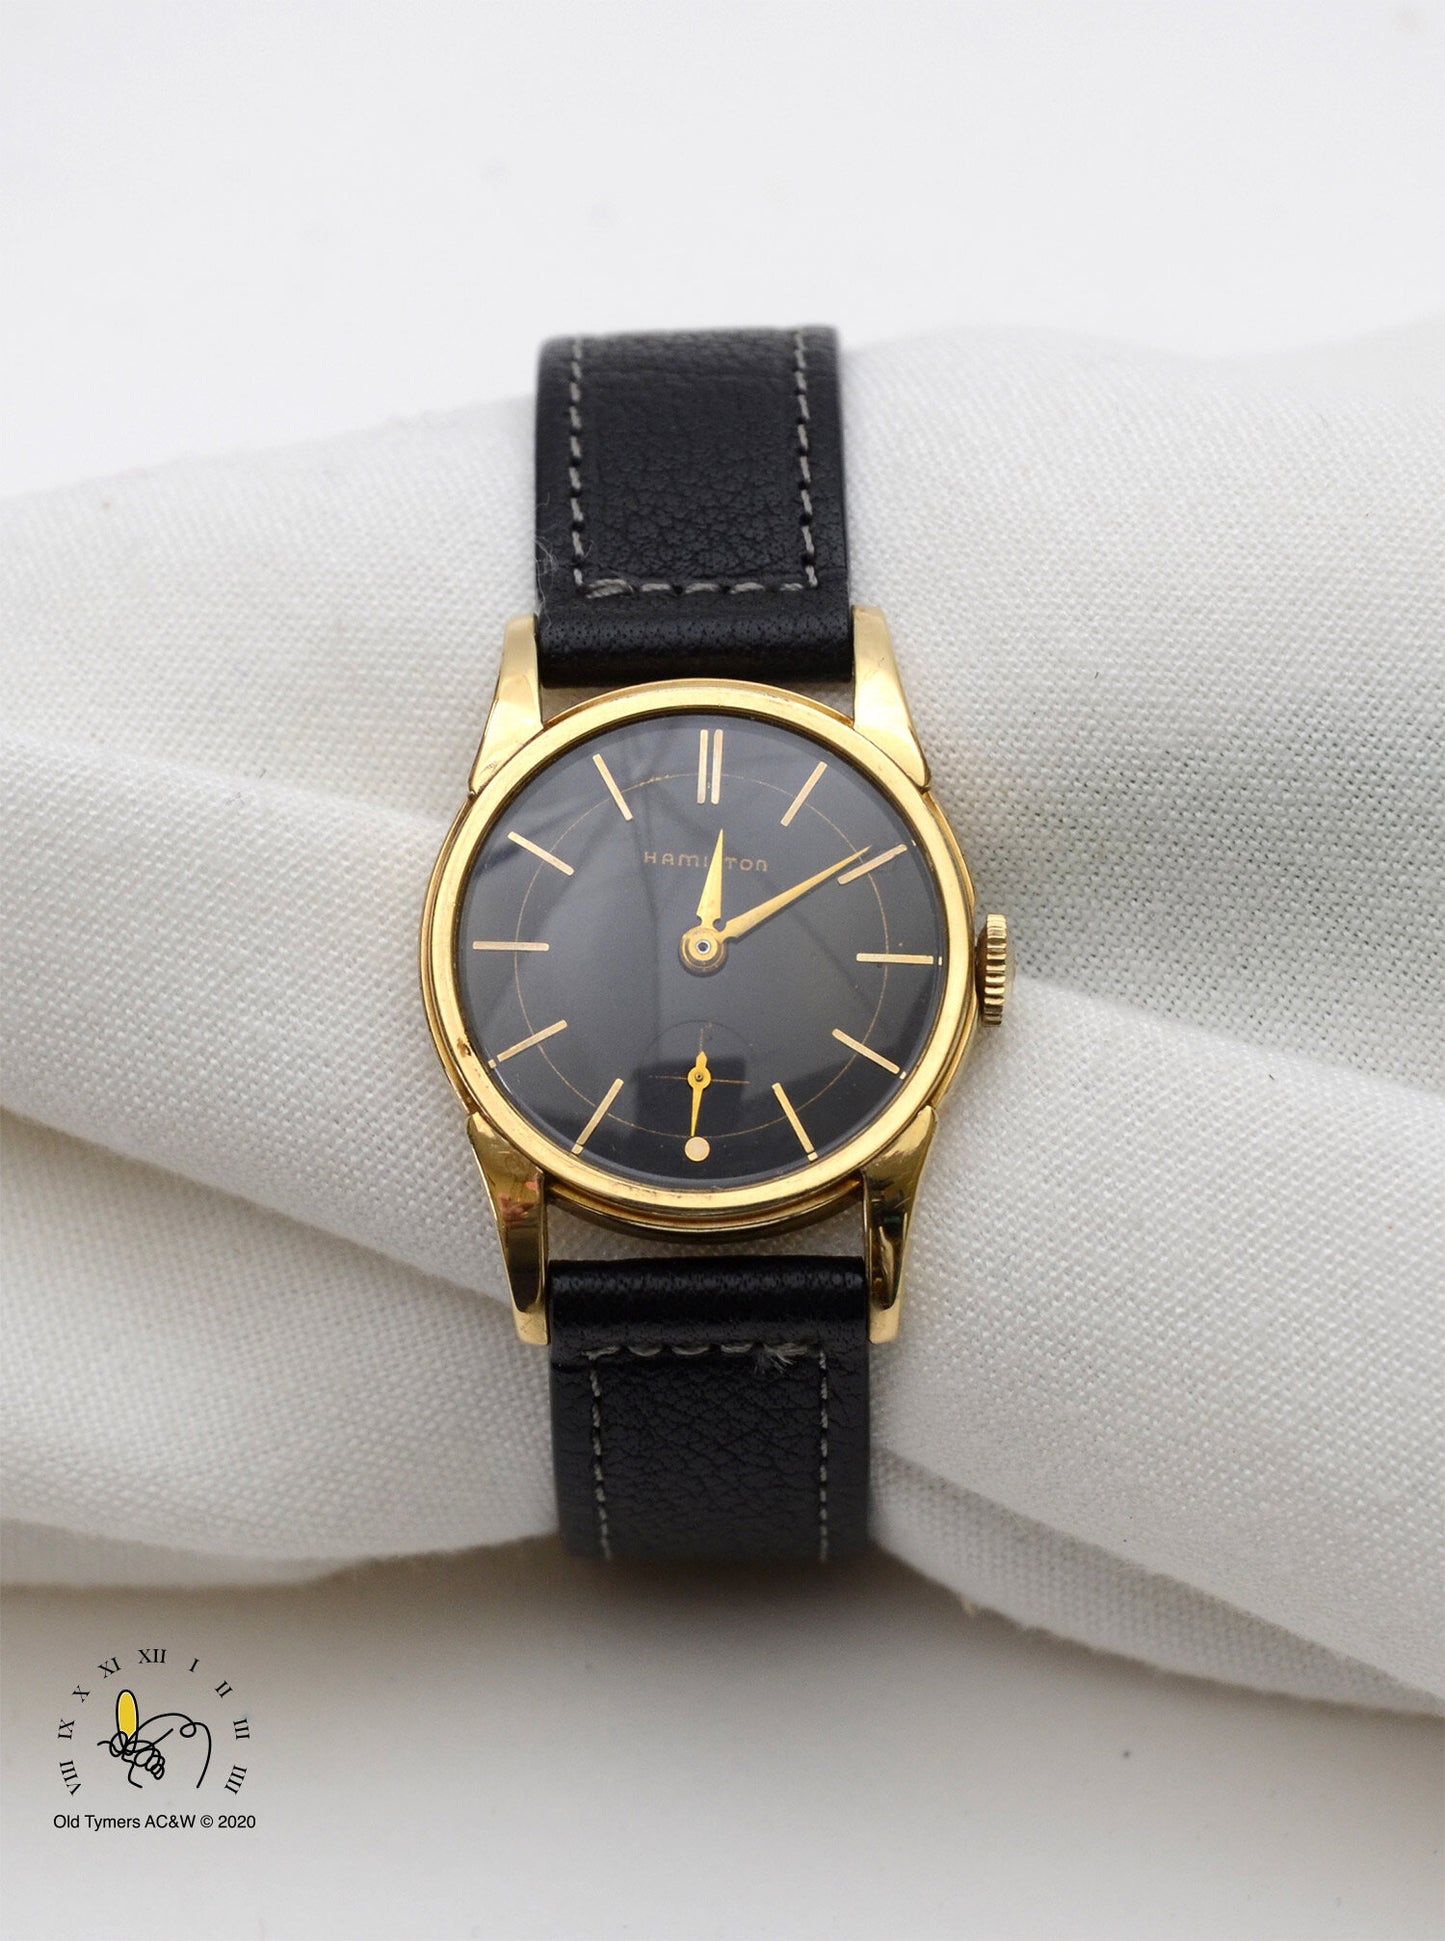 Hamilton 987A Wrist Watch